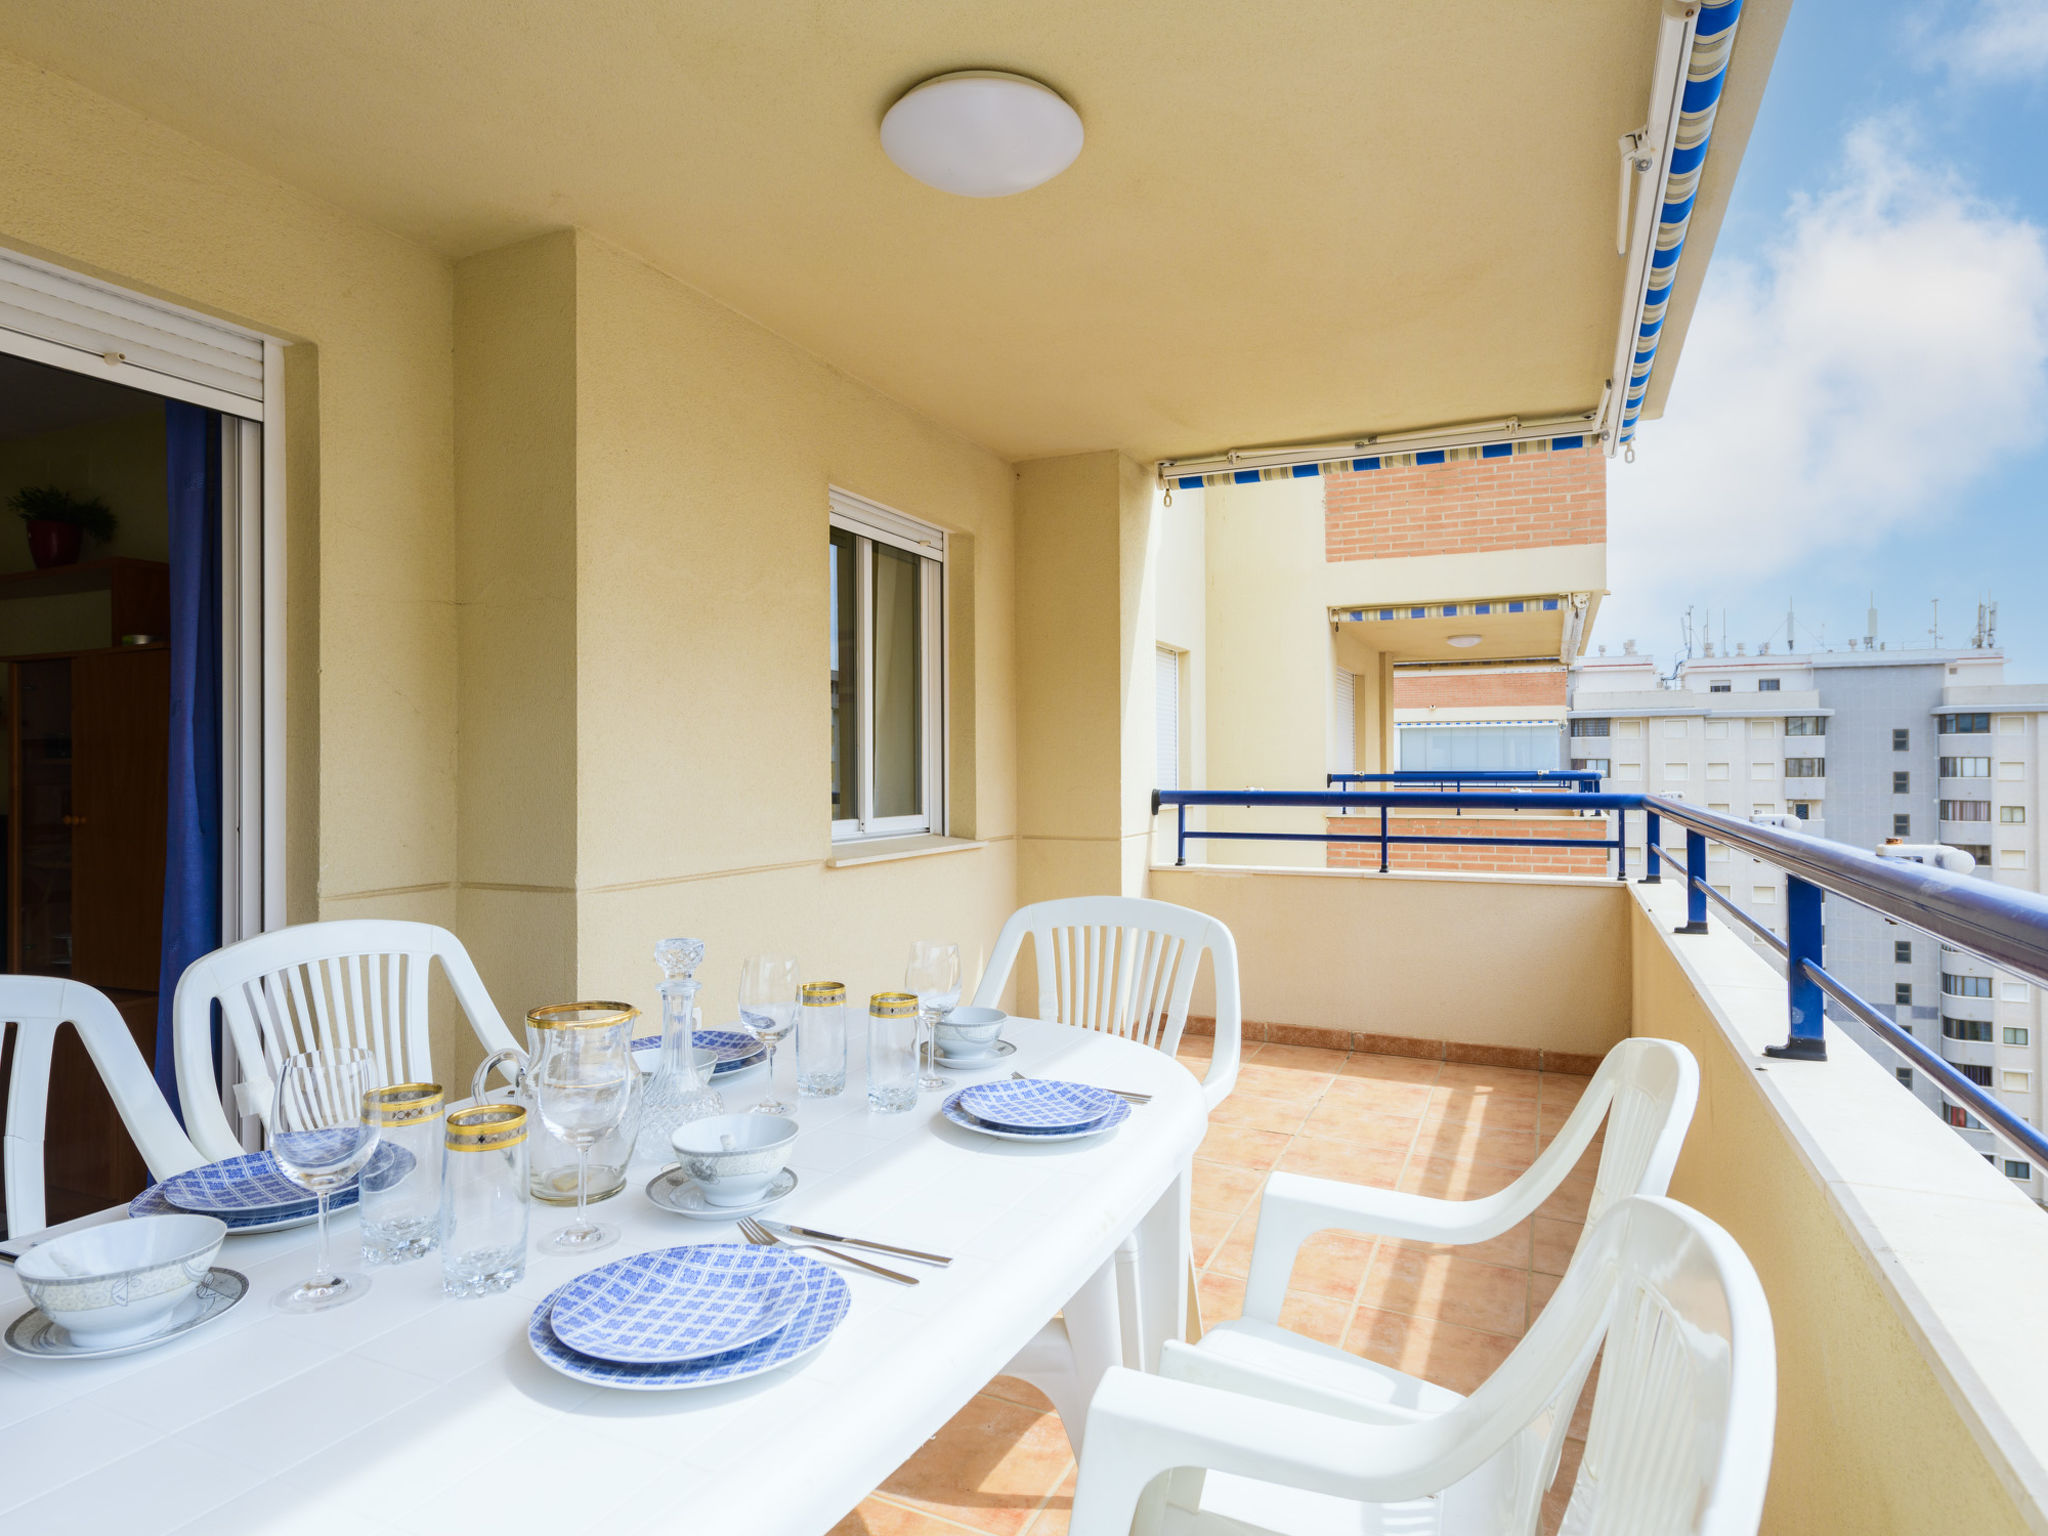 Photo 21 - Appartement de 2 chambres à Oropesa del Mar avec piscine et vues à la mer